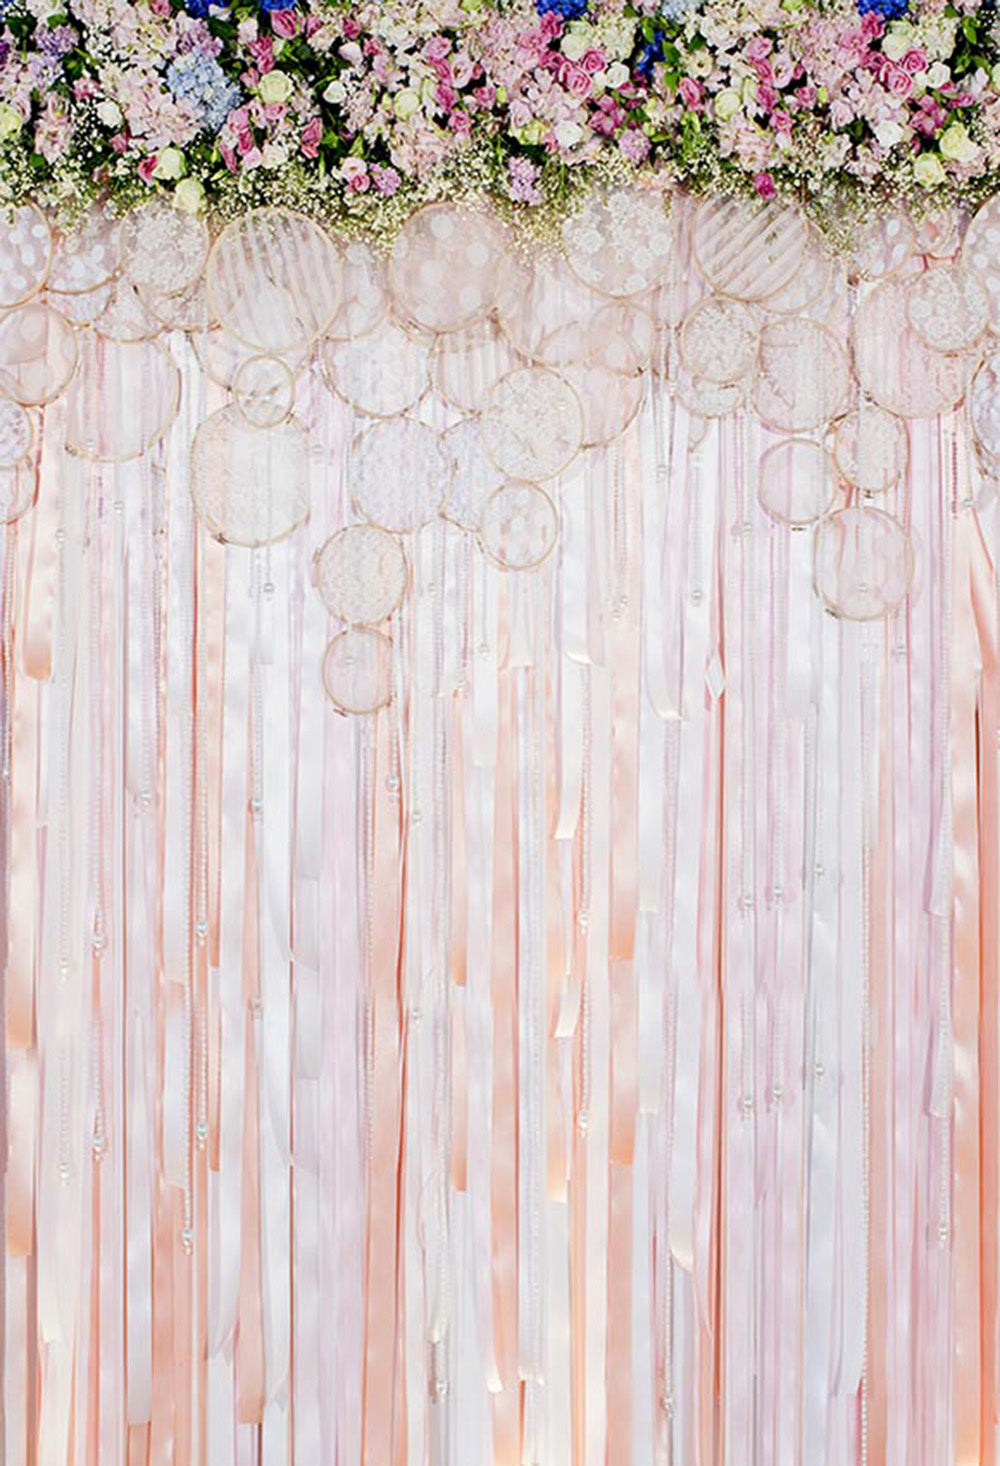 3-d floral photo backdrop wedding shower paper flower customized